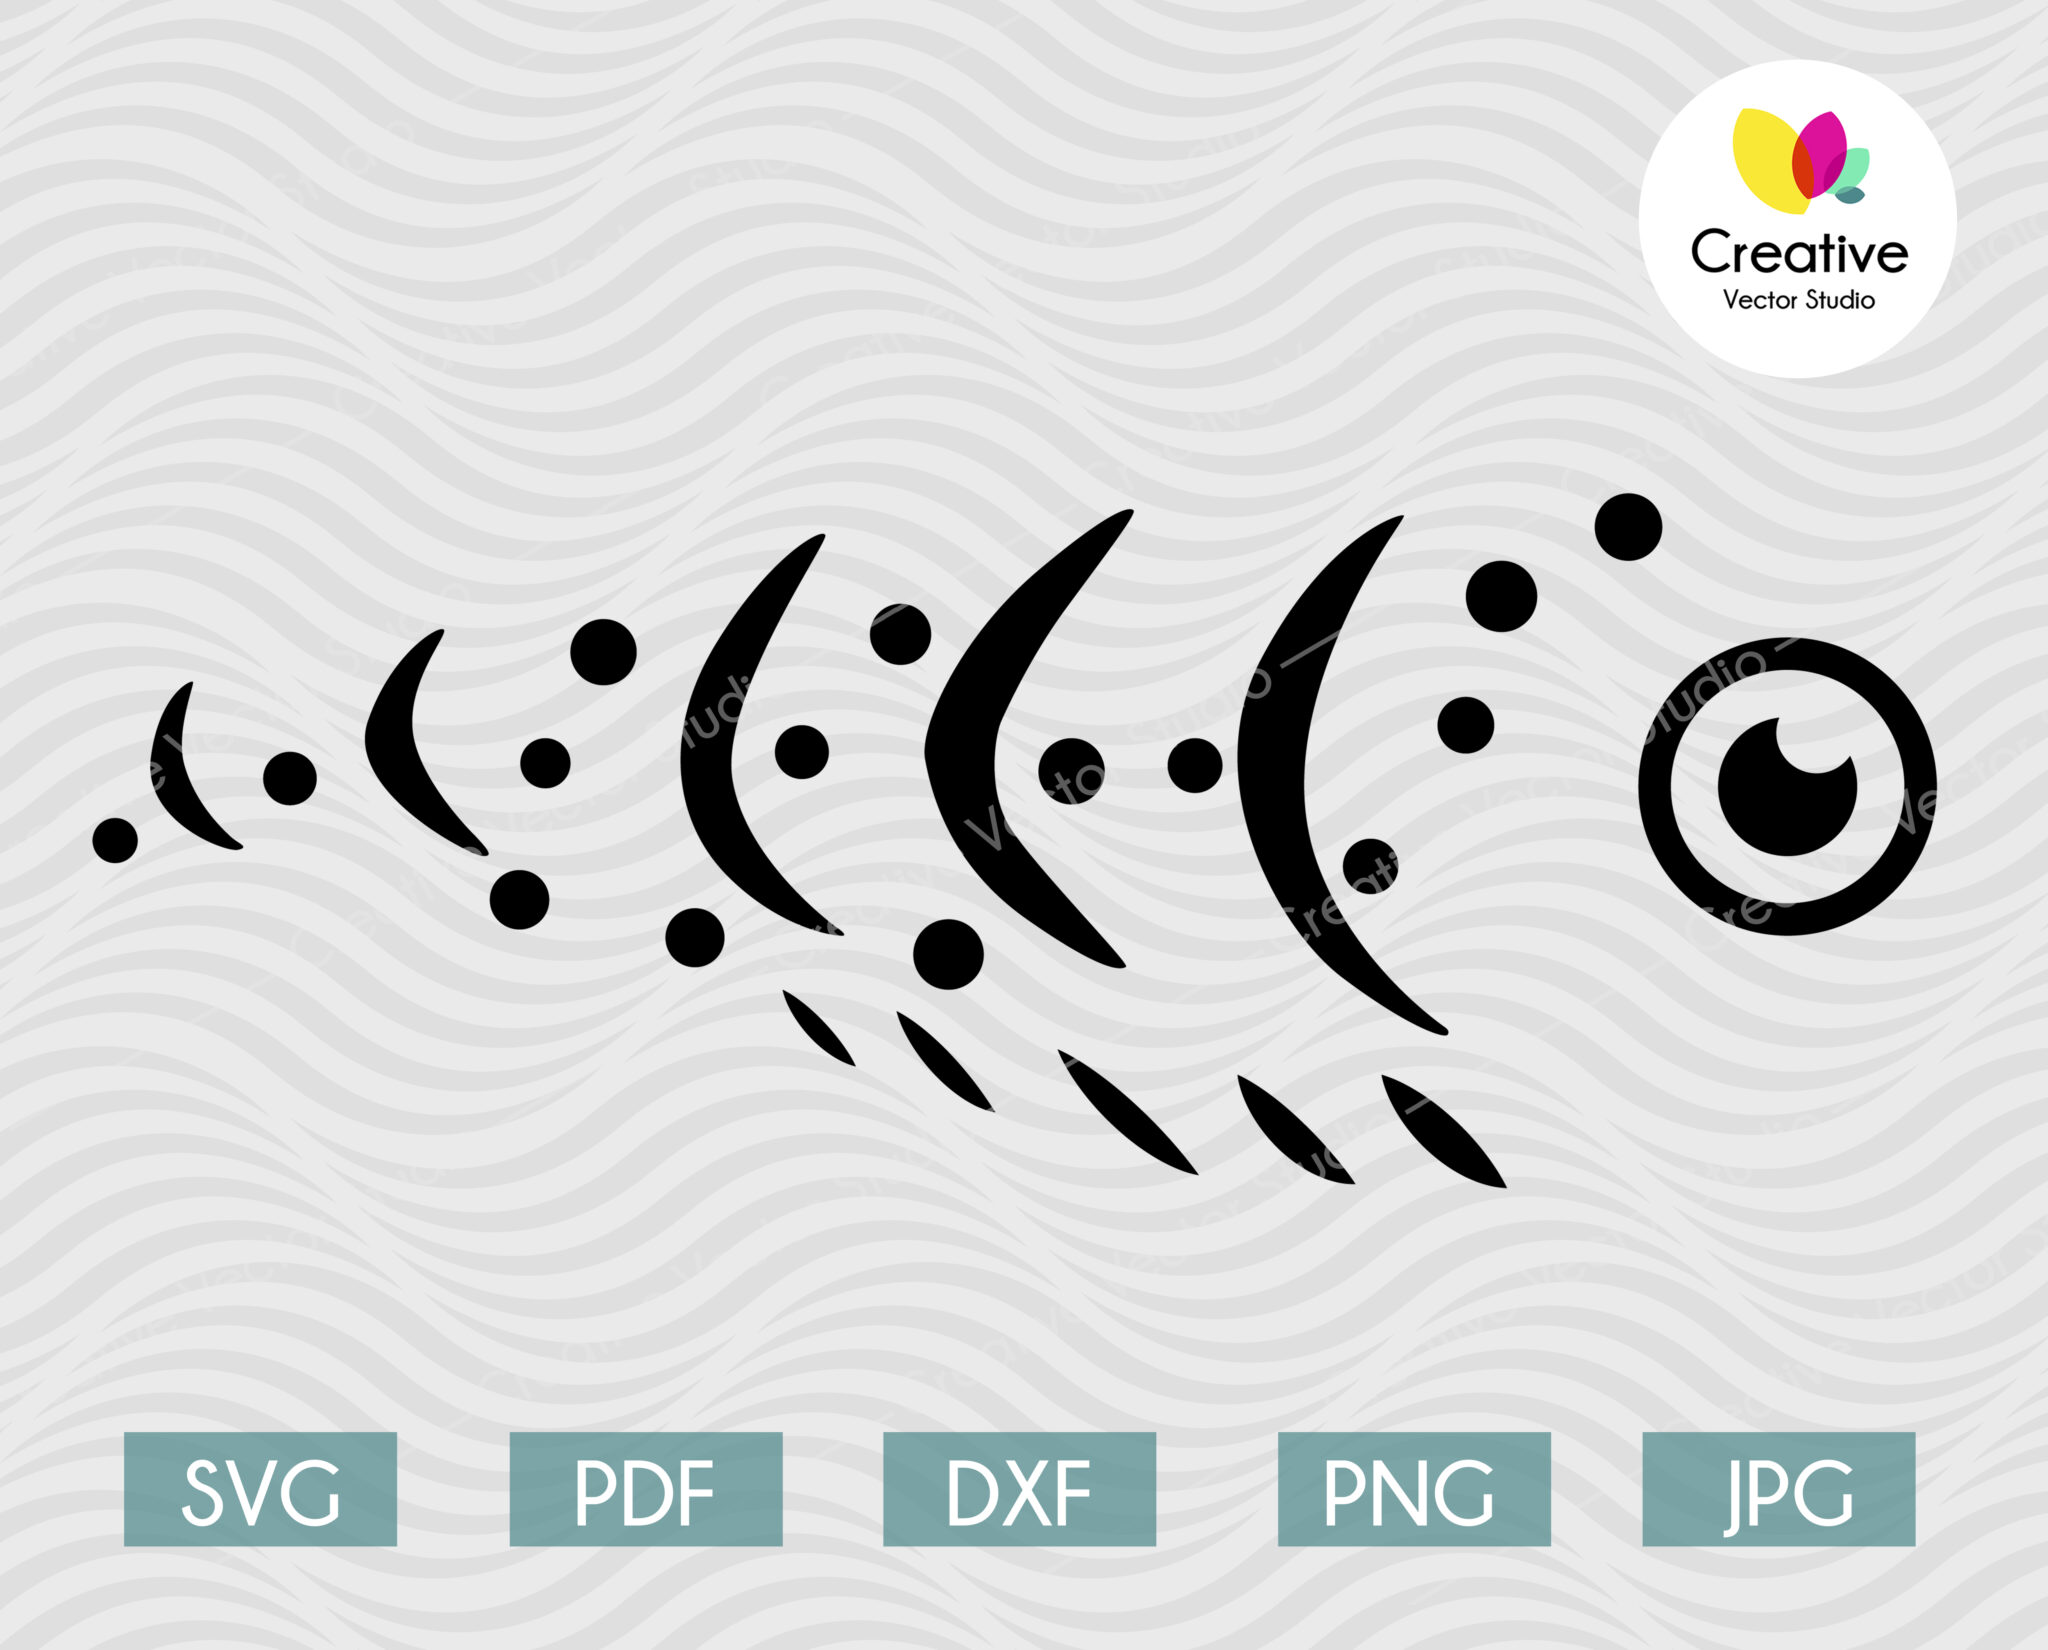 Download Fishing Lure SVG #23 Cut File Image | Creative Vector Studio